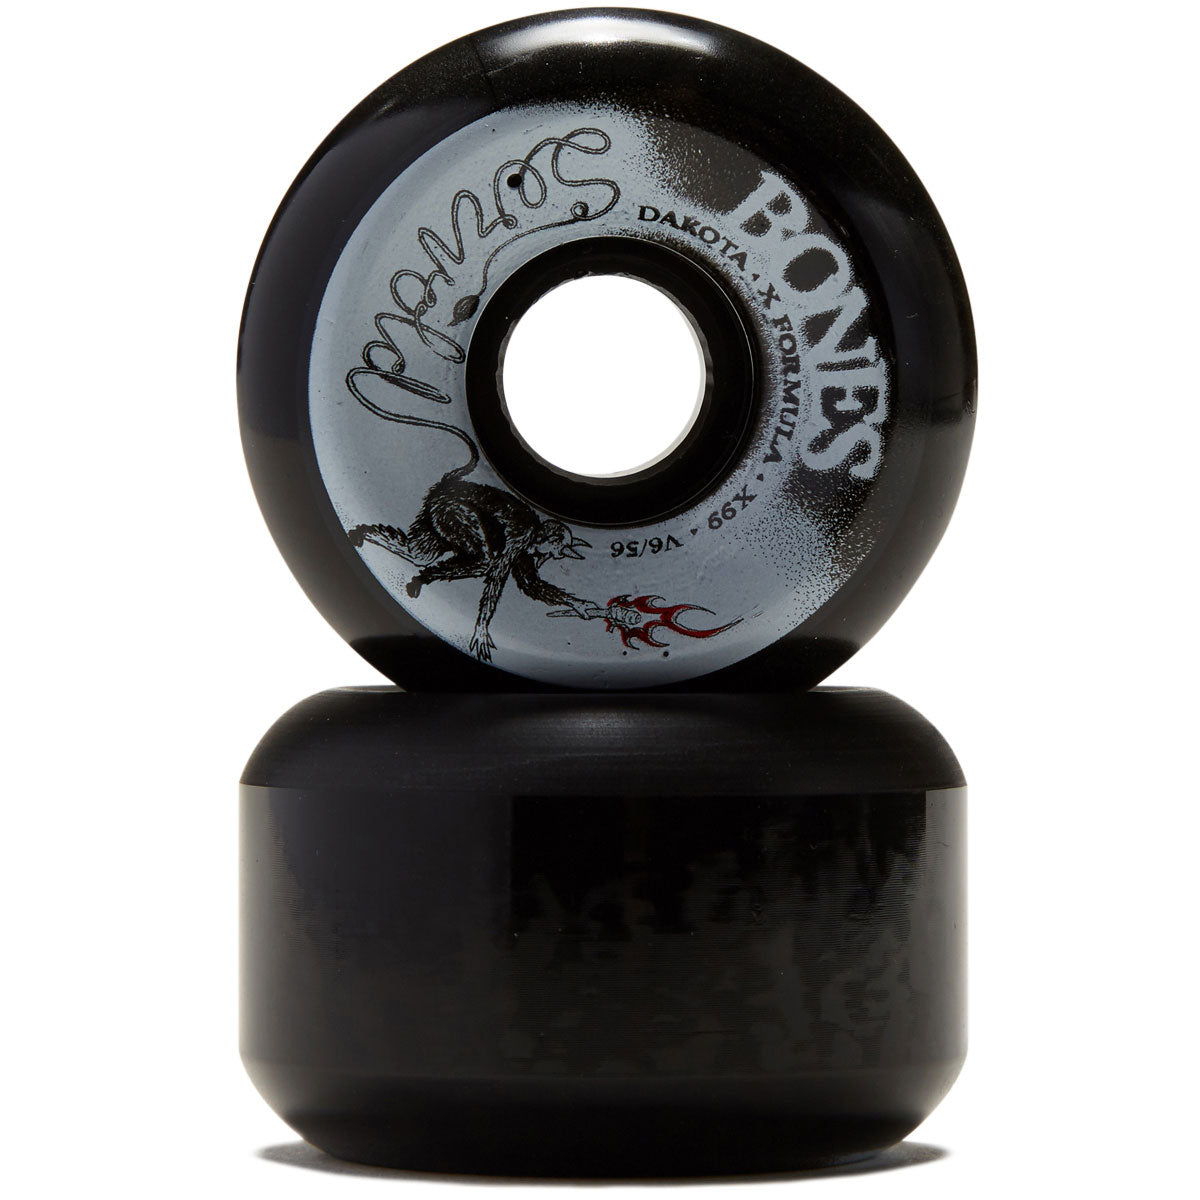 Bones Dakota Servold Eternal V6 Wide-Cut 99a Skateboard Wheels - Black - 56mm image 2